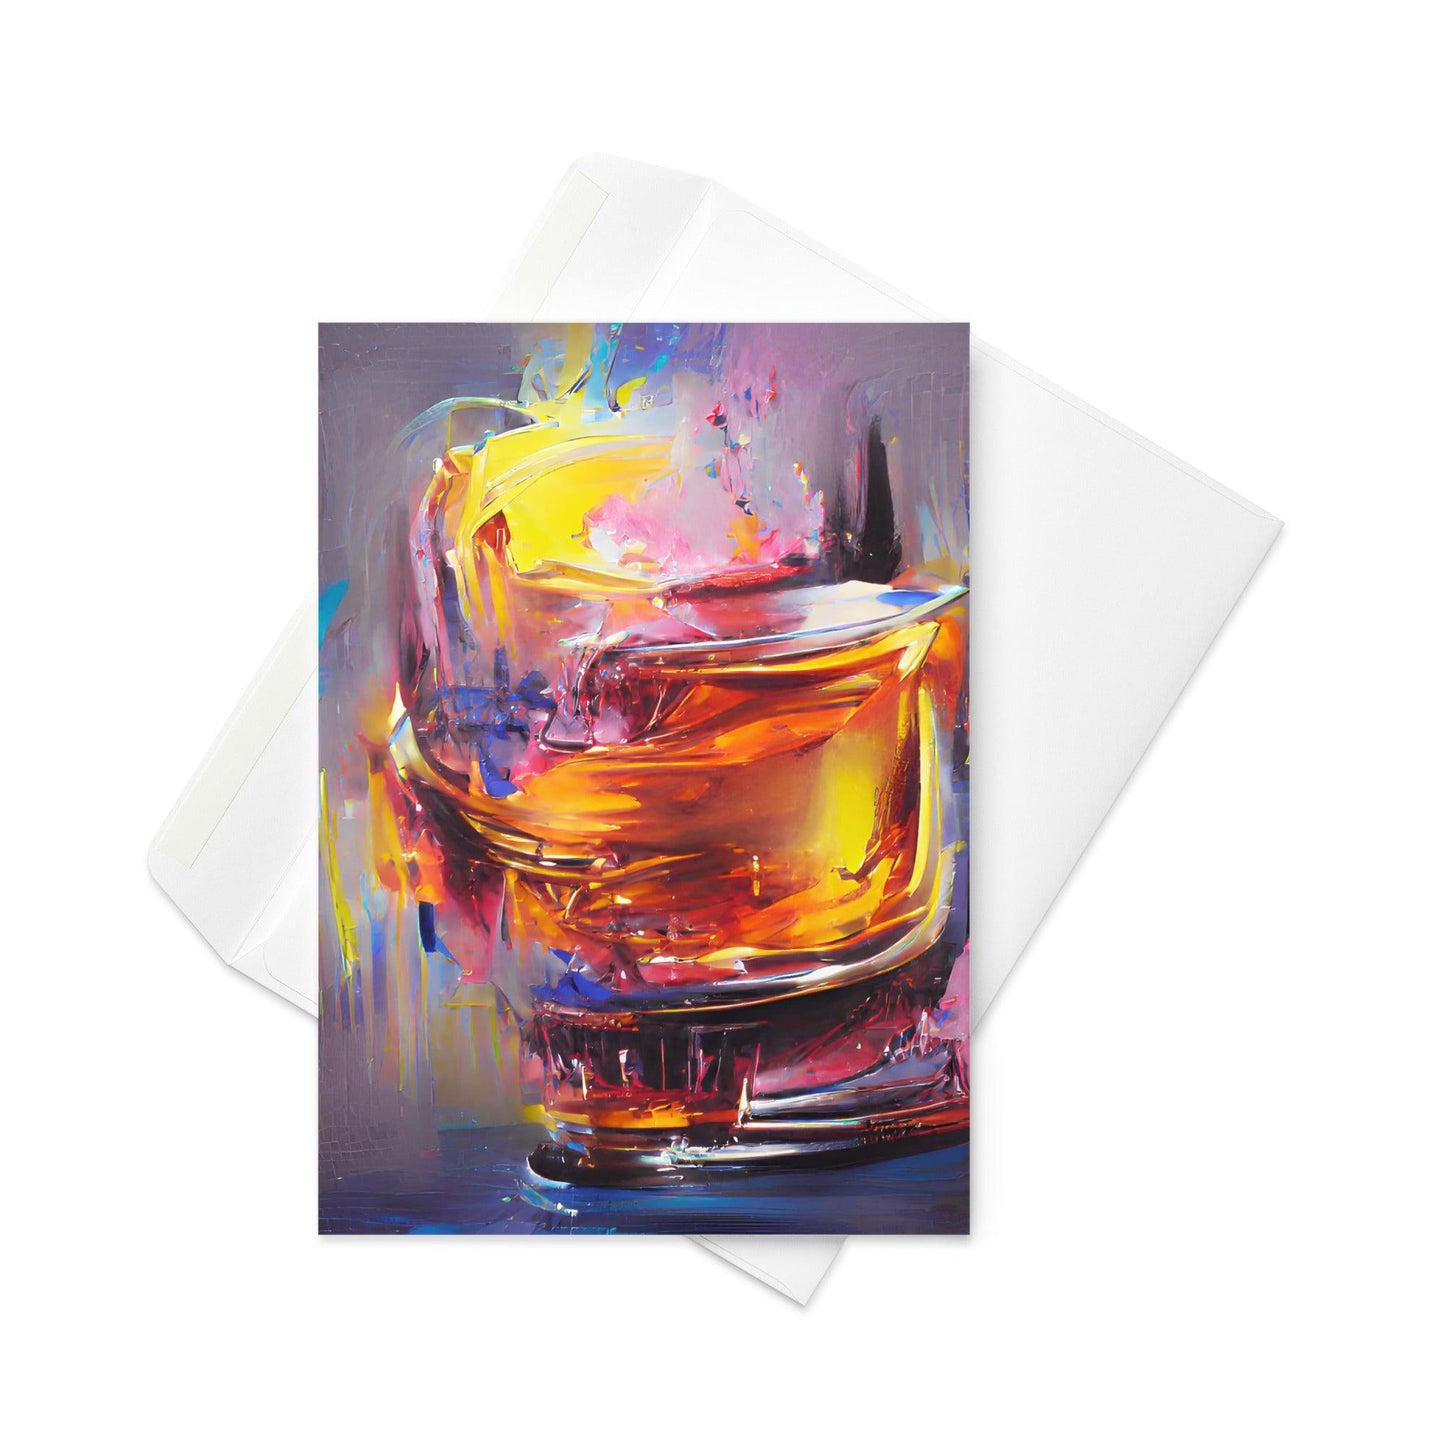 Whisky Splash - Note Card - iSAW Company